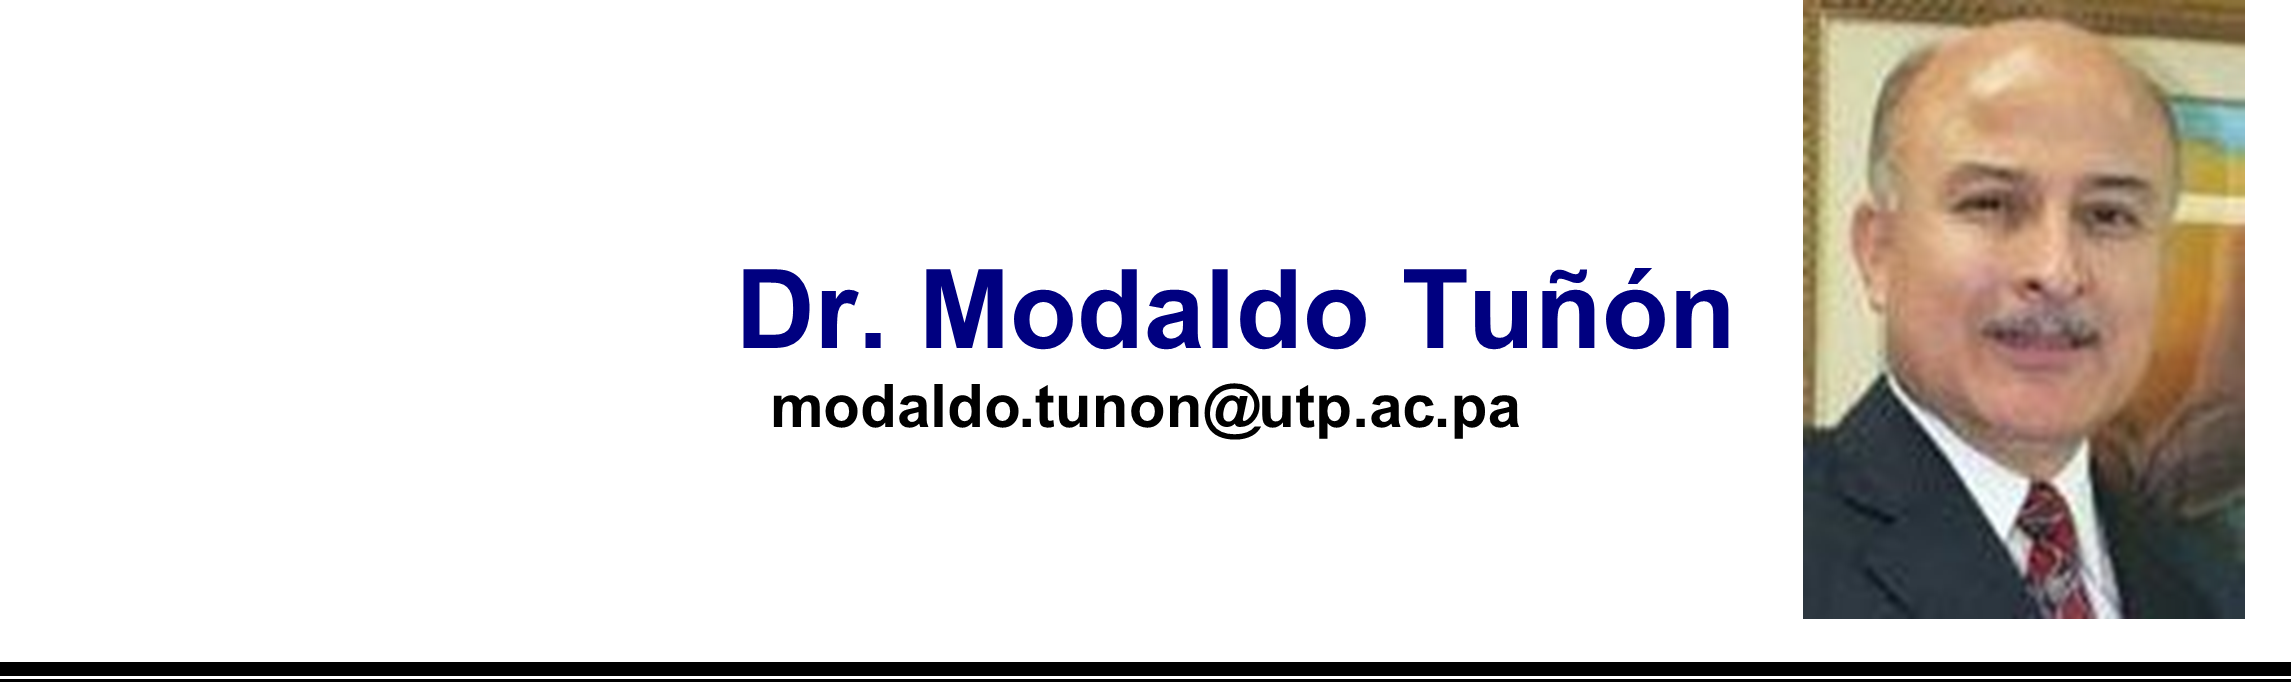 Modaldo T (1).png